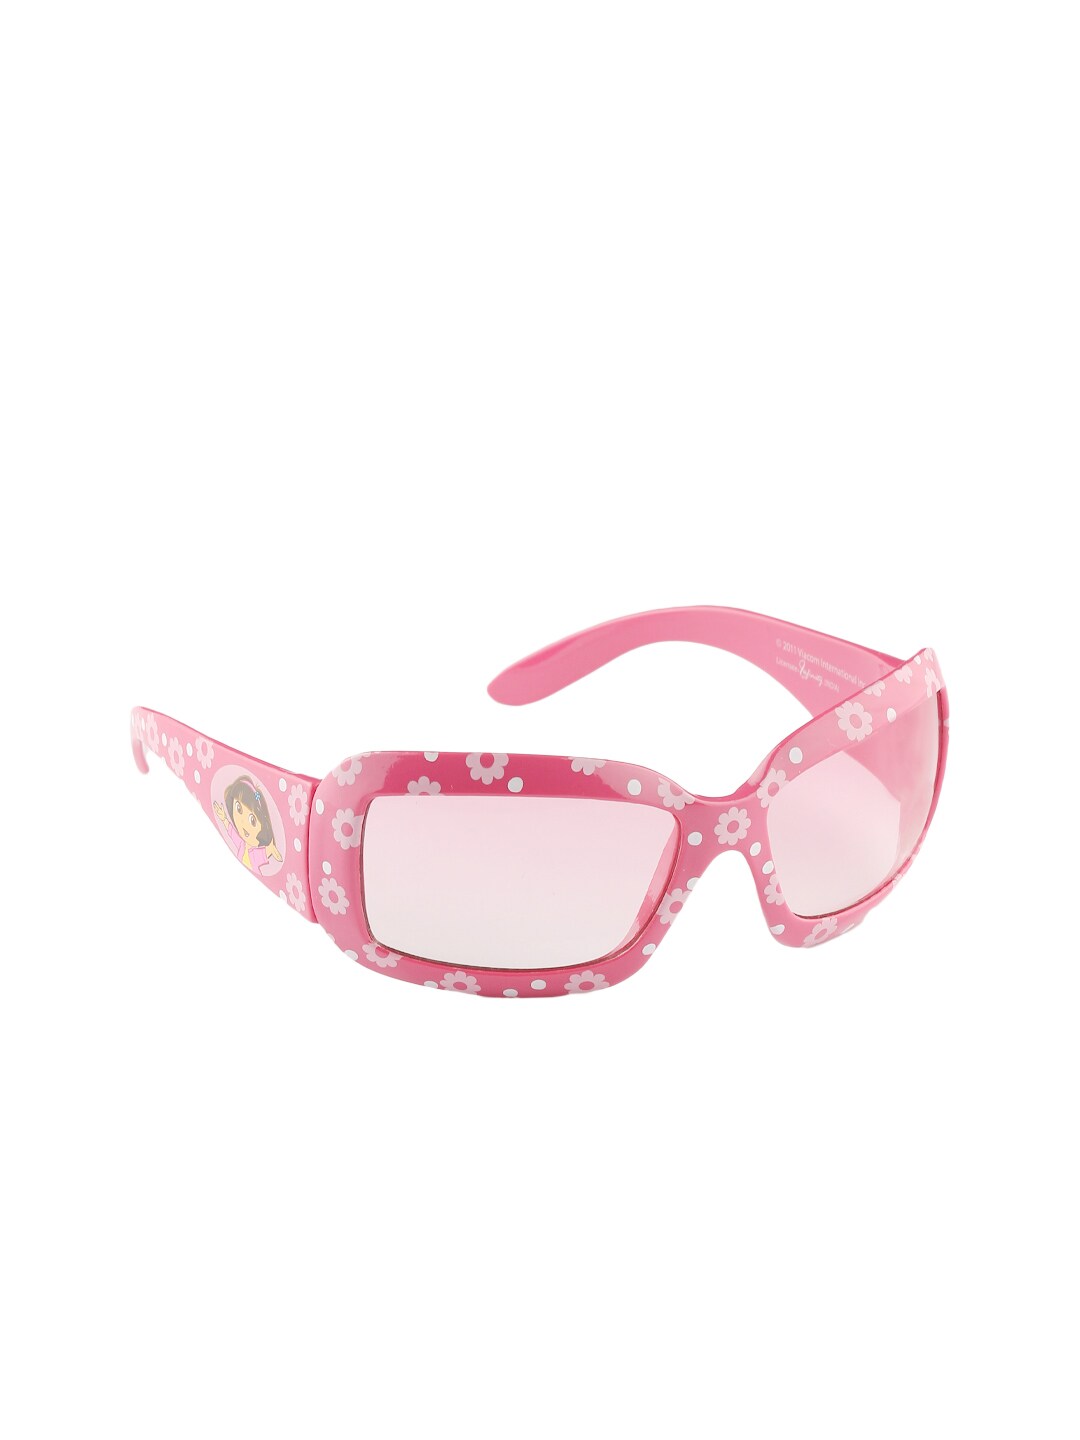 Hop Scotch Girls Pink Sunglasses